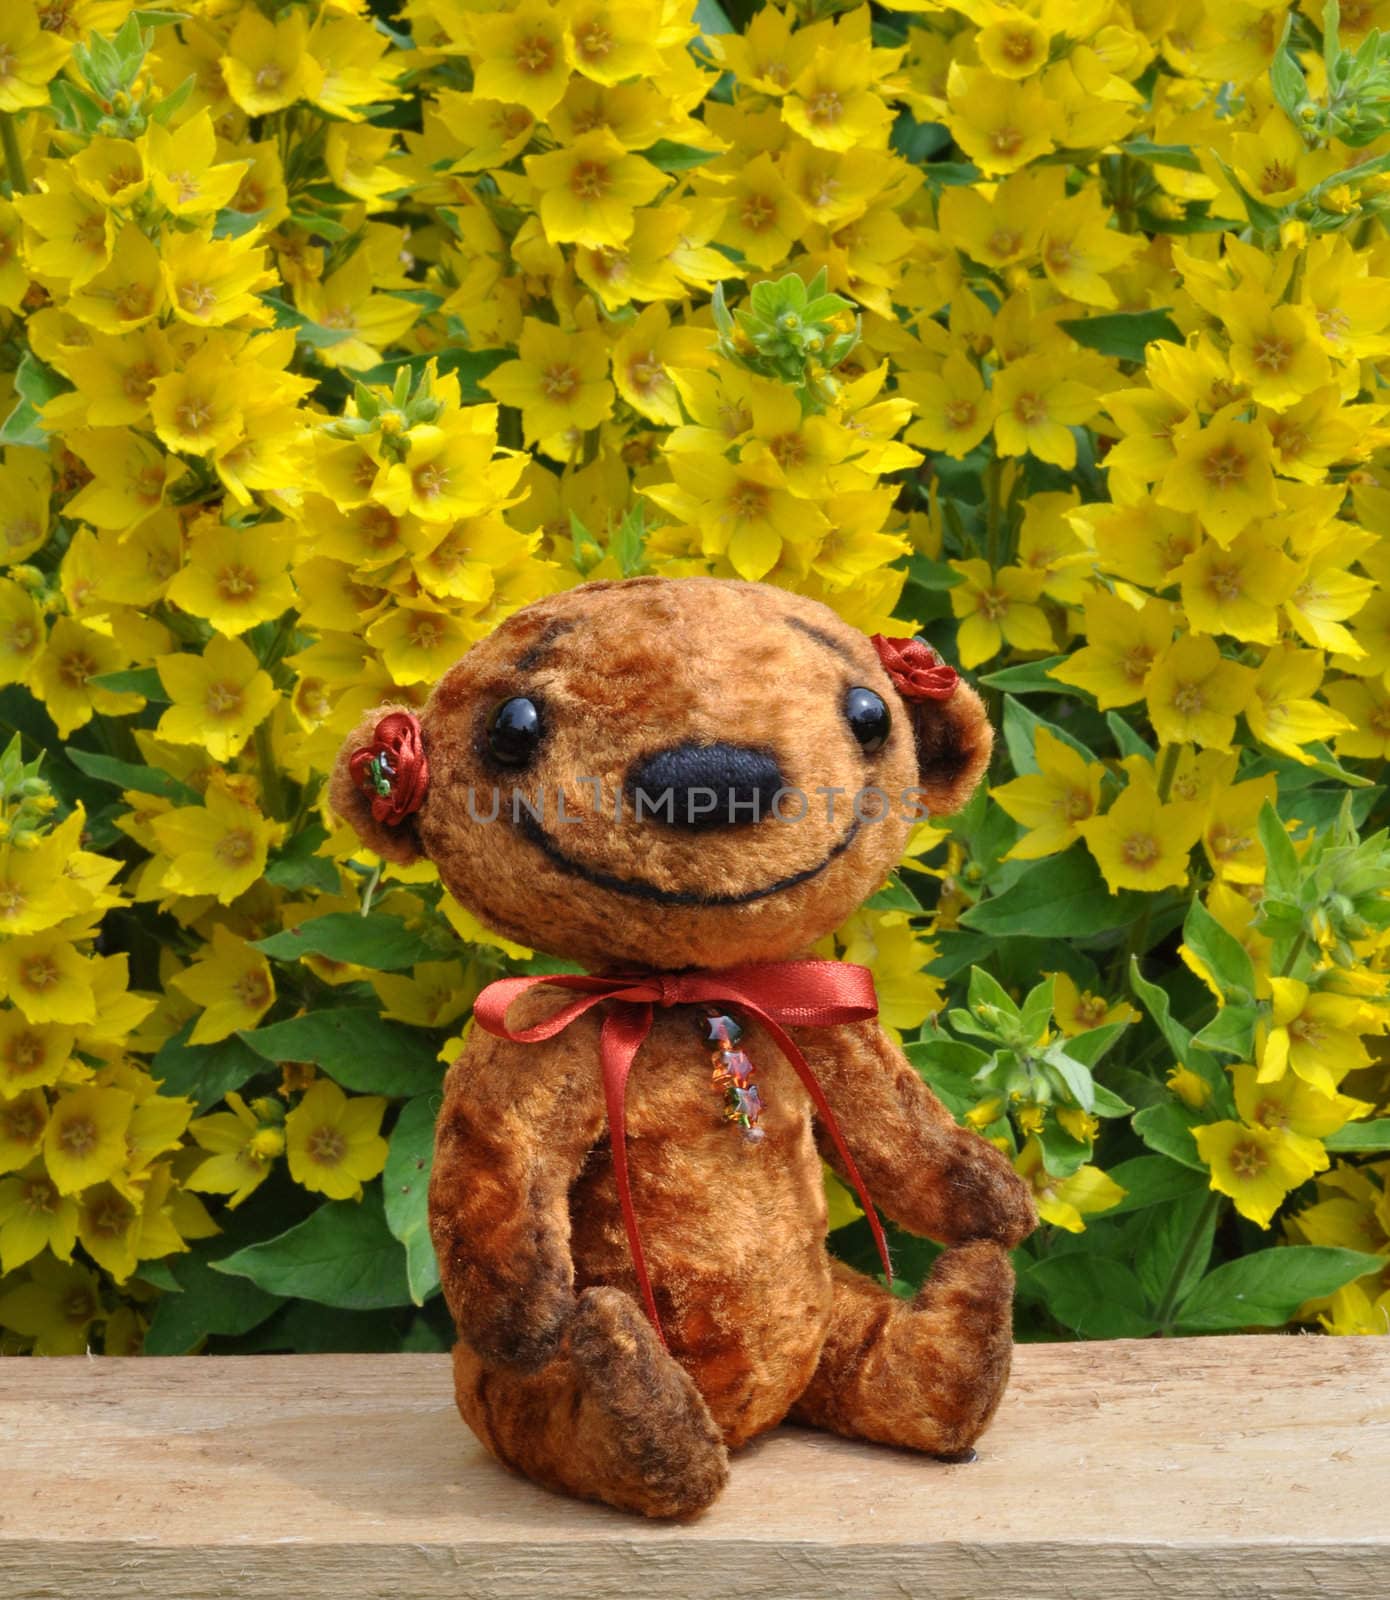 Handmade, the sewed plush toy: Teddy-bear Niusia weirdo on a board among flowers